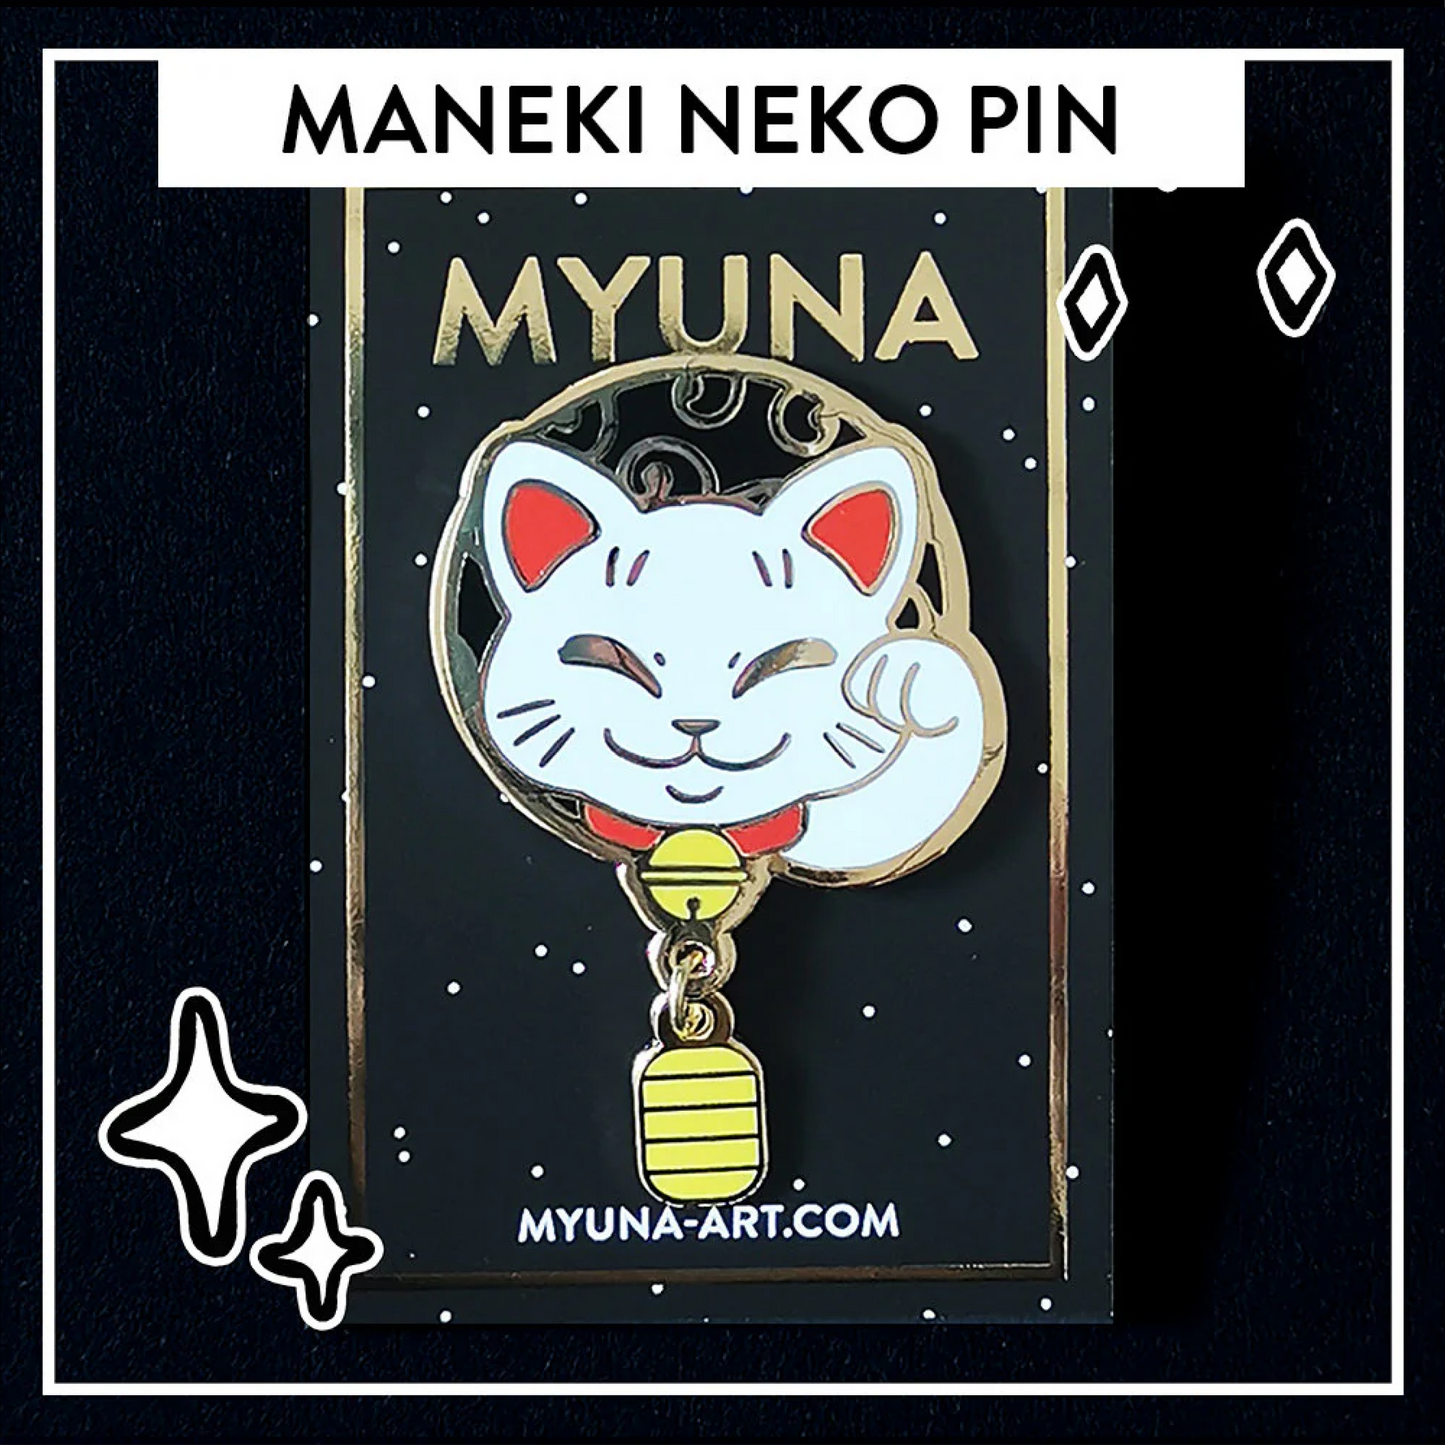 Maneki Neko / Lucky Cat Pin - Japanese Yōkai Hard Enamel Pendant Pin